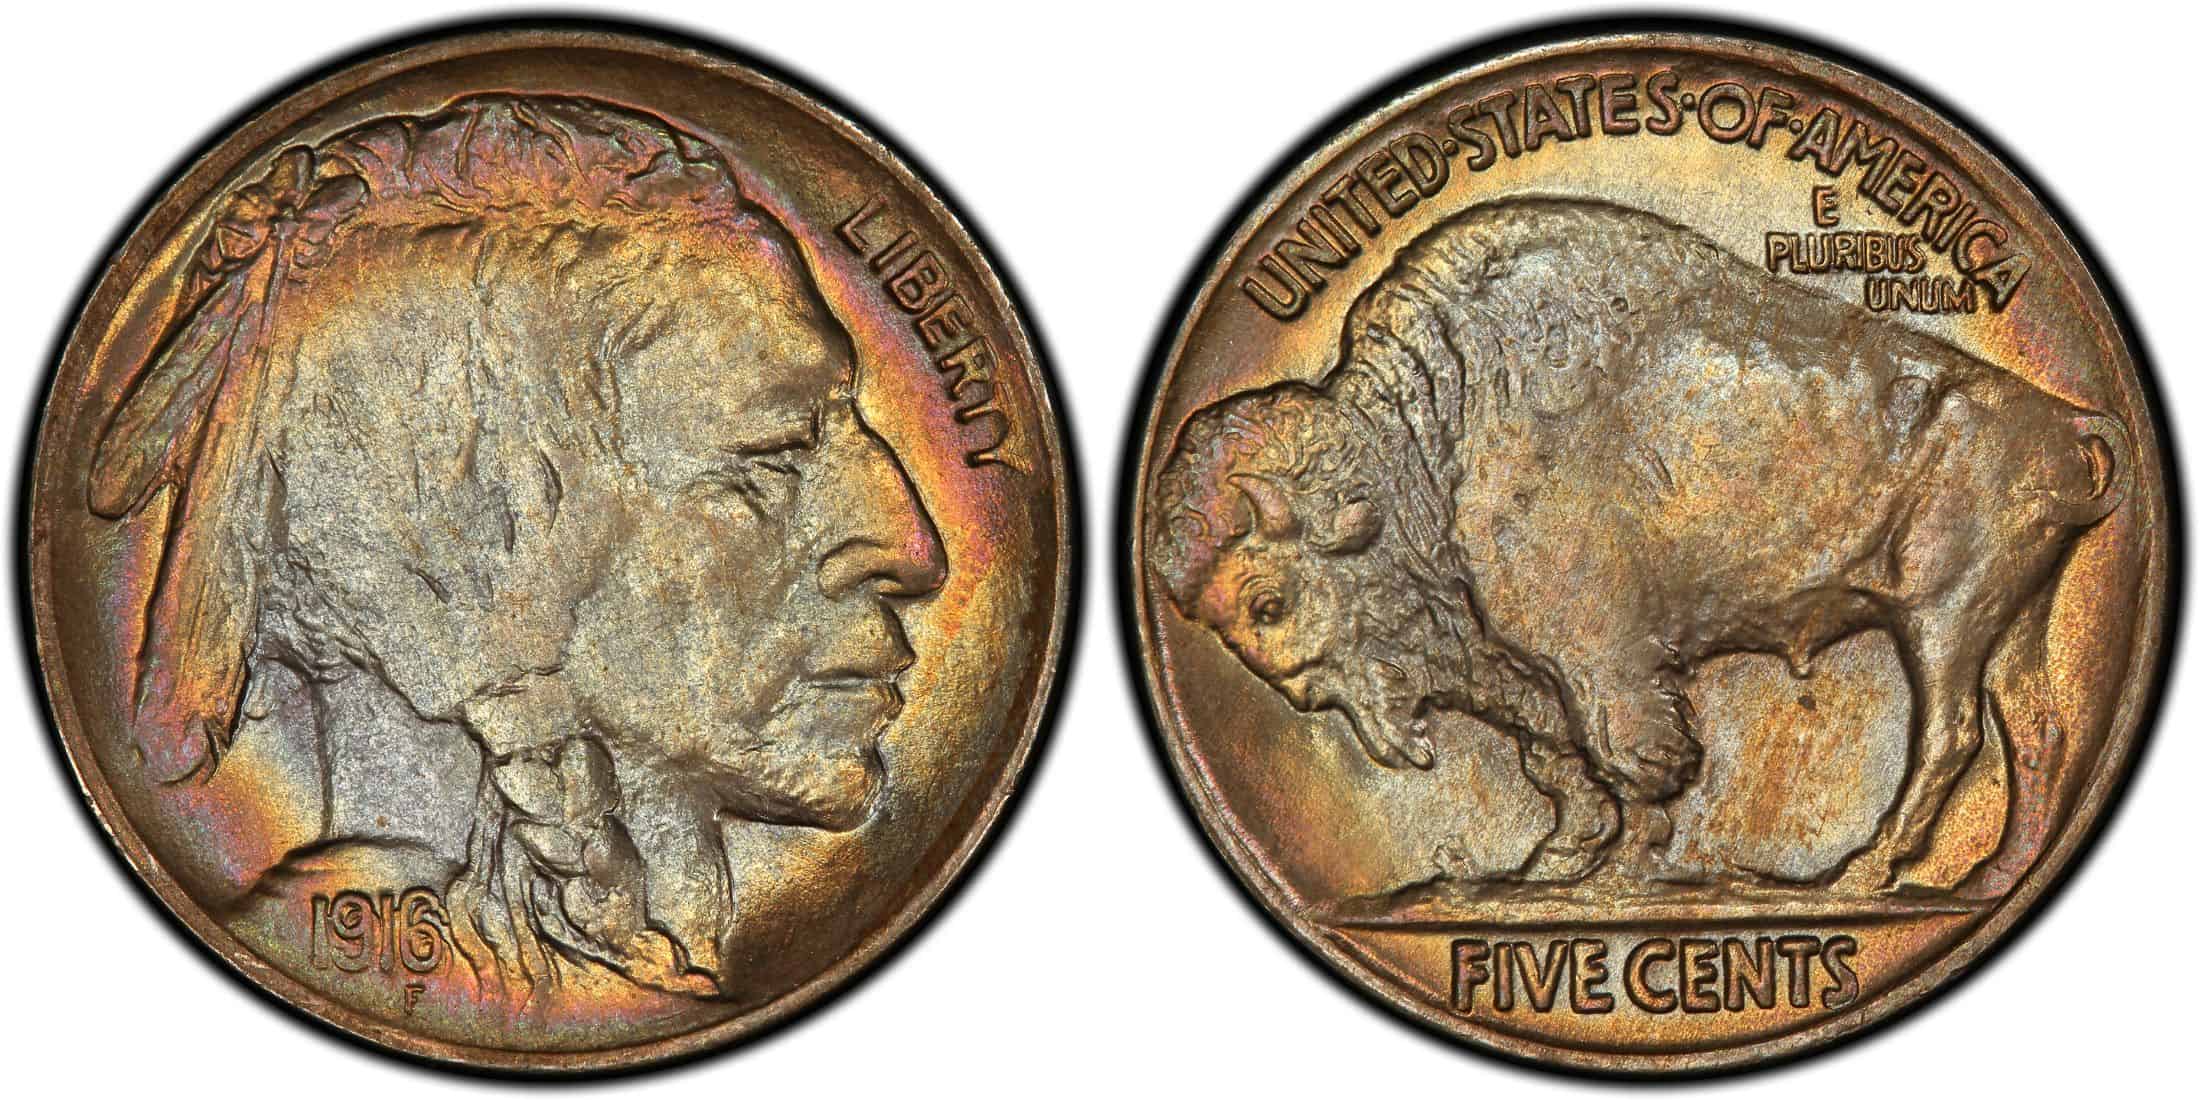 1916 MS 64 Buffalo nickel (doubled die obverse)